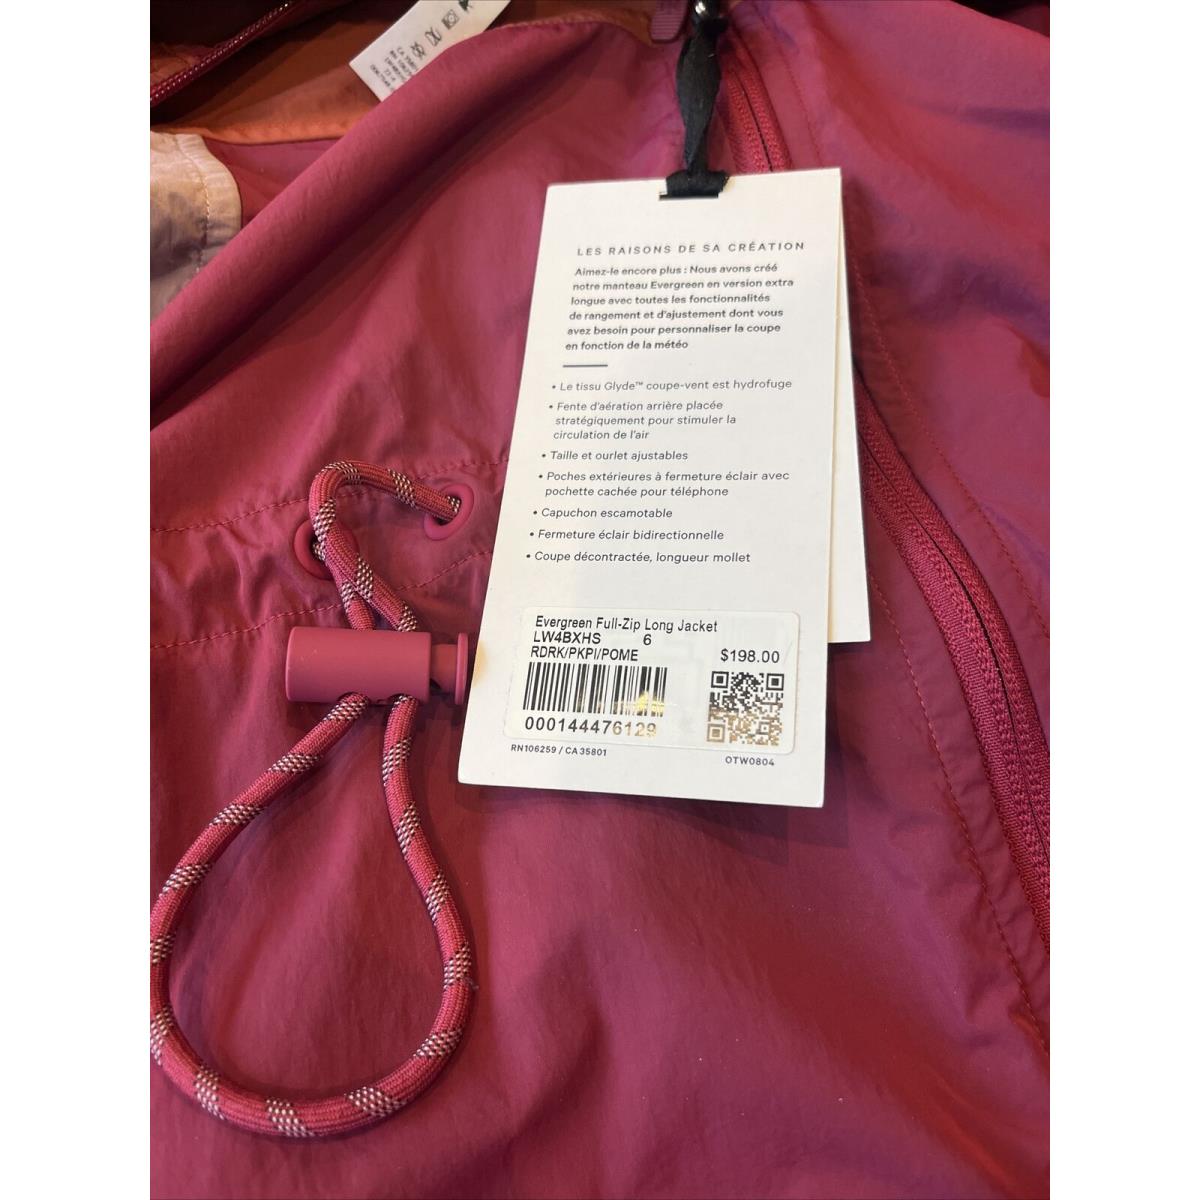 Lululemon Evergreen Full-zip Long Jacket Size 6 LW4BXHS Red Rdrk